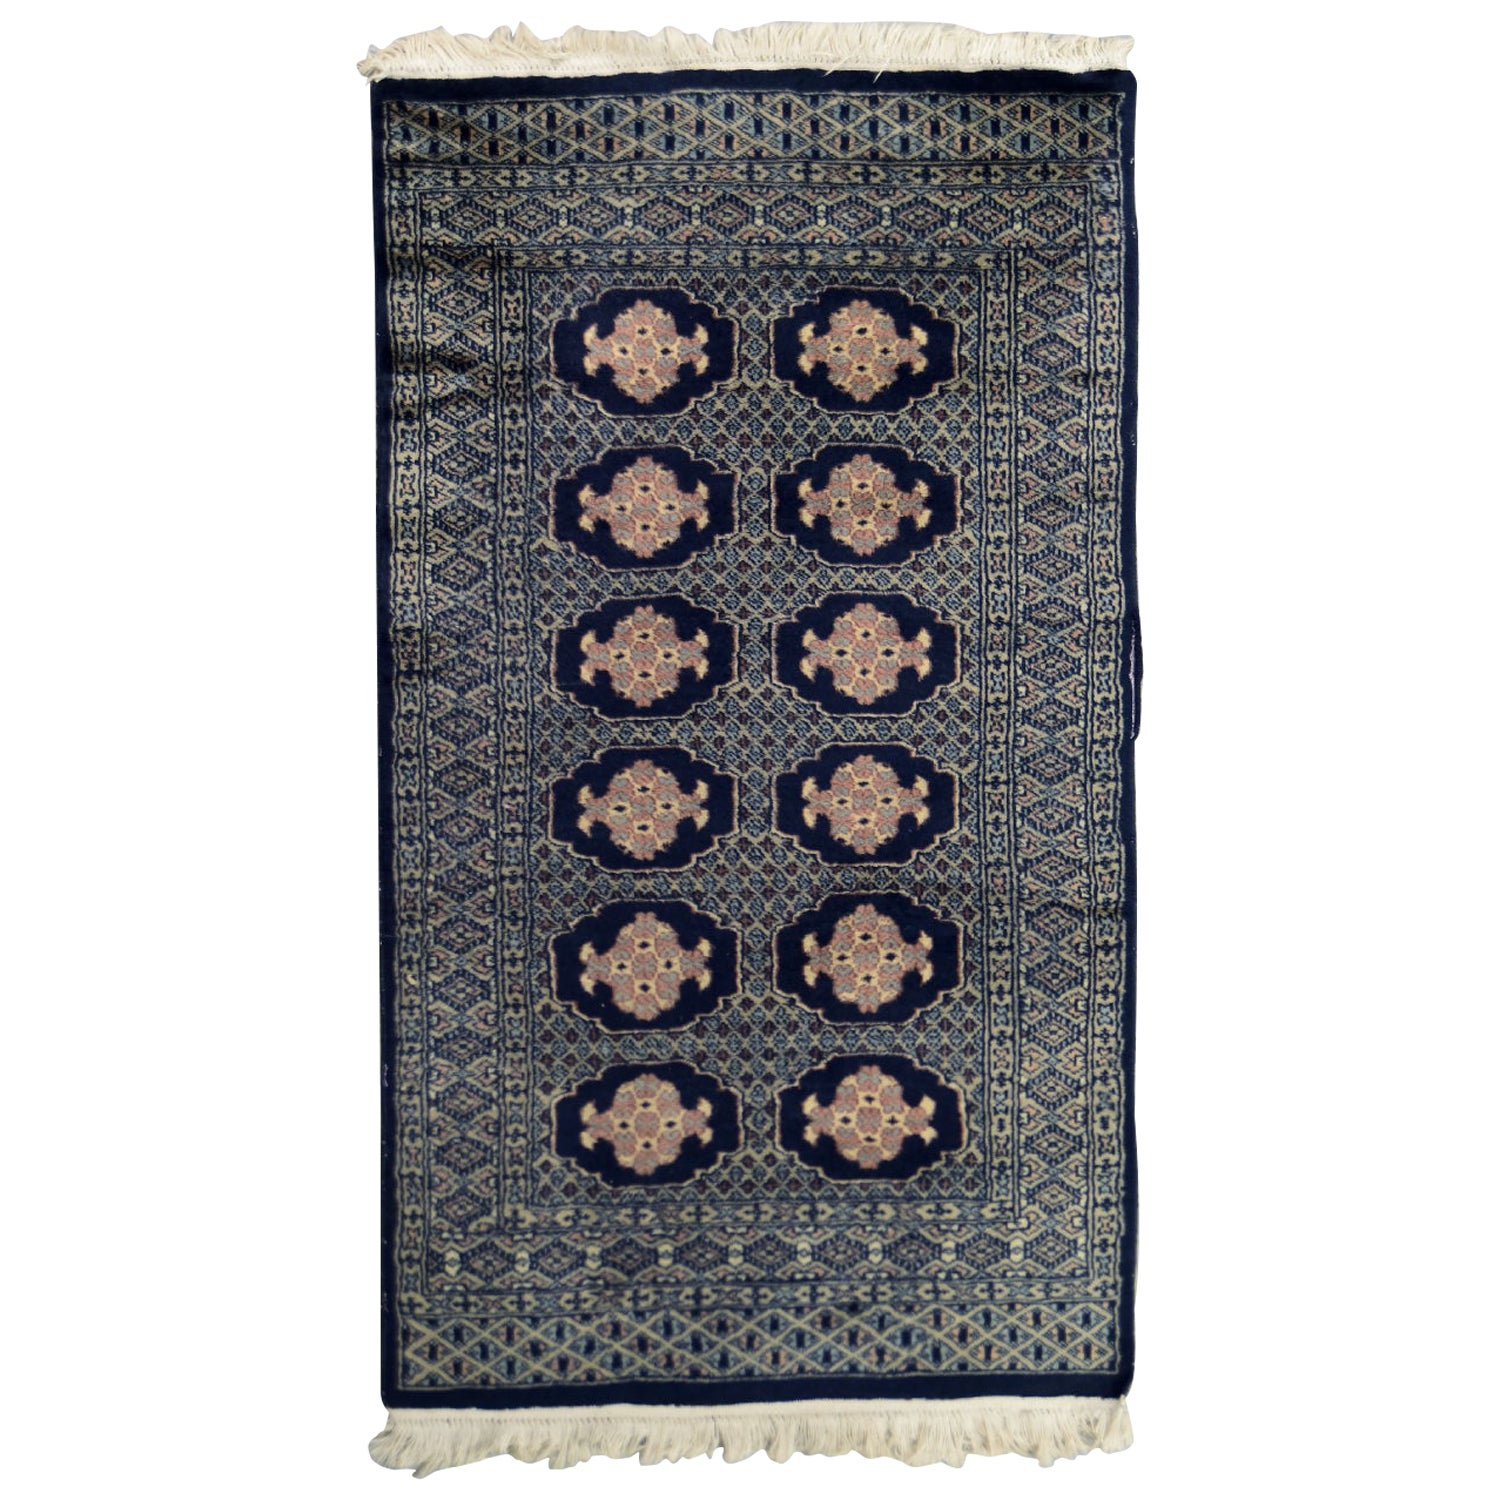 Vintage Original Pakistani Hand-Woven Oriental Blue Bukhara Rug from Ikea, 1960s For Sale